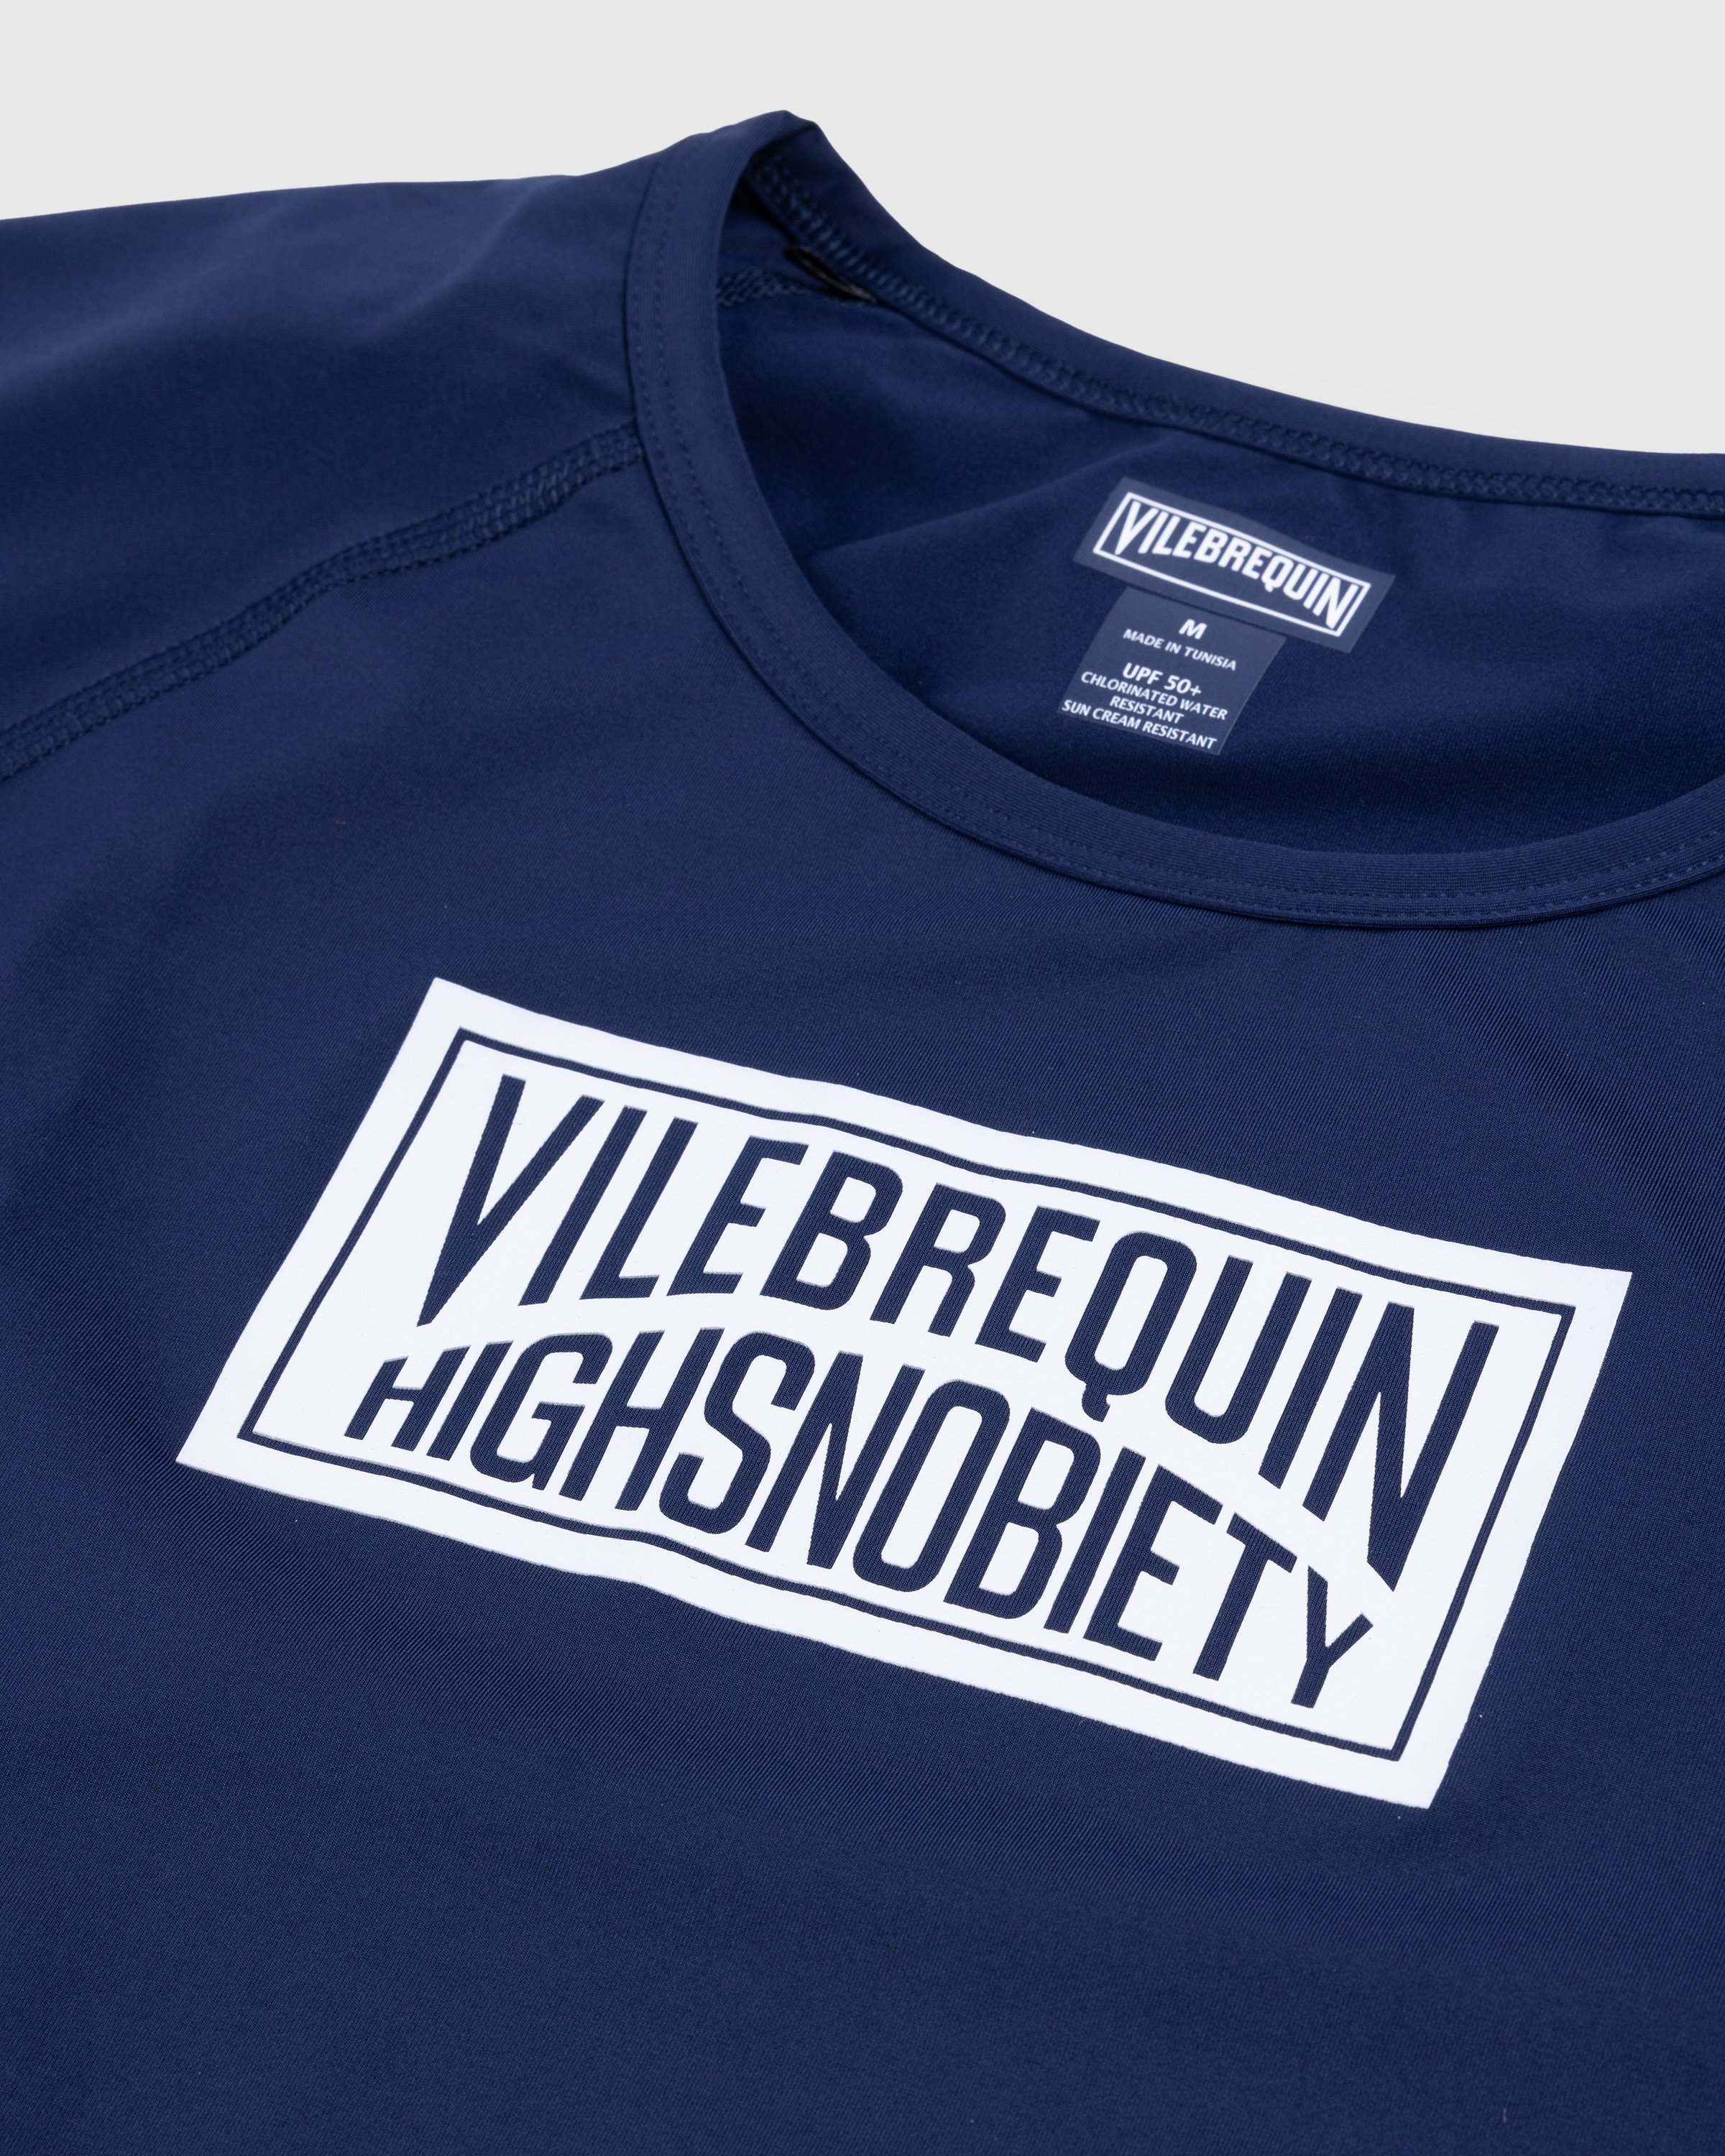 Vilebrequin x Highsnobiety - Long Sleeve Logo Rashguard Navy - Clothing - Blue - Image 6